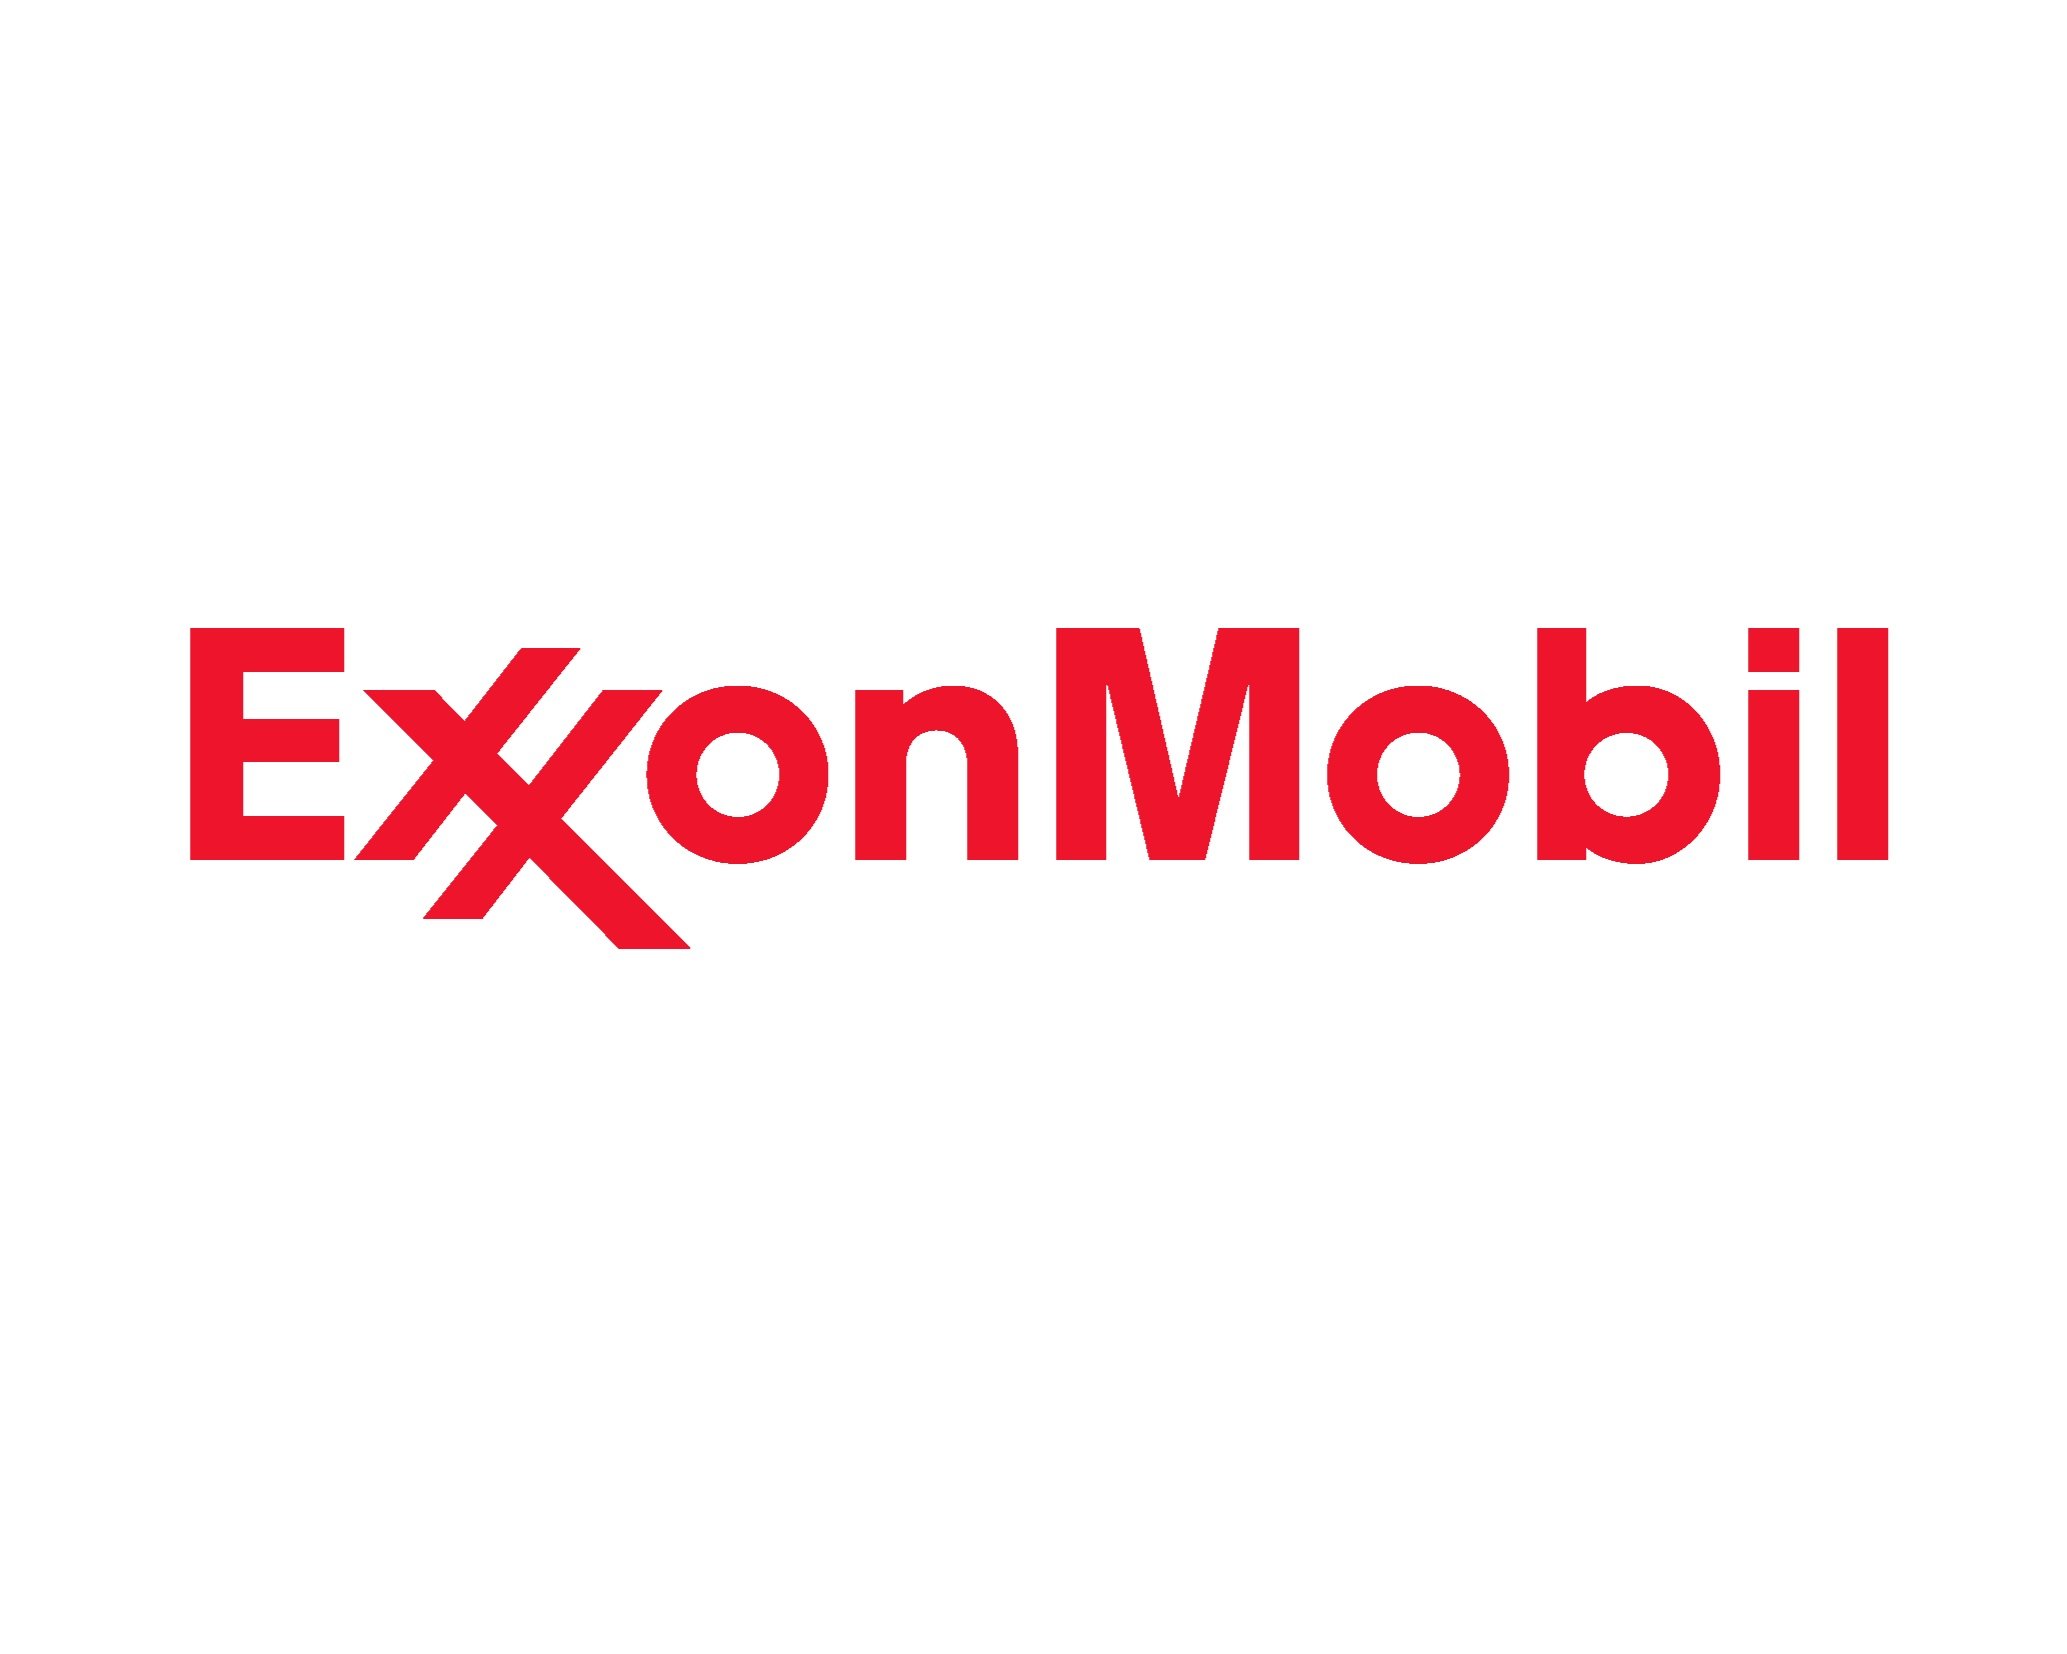 ExxonMobil_logo_red.jpg